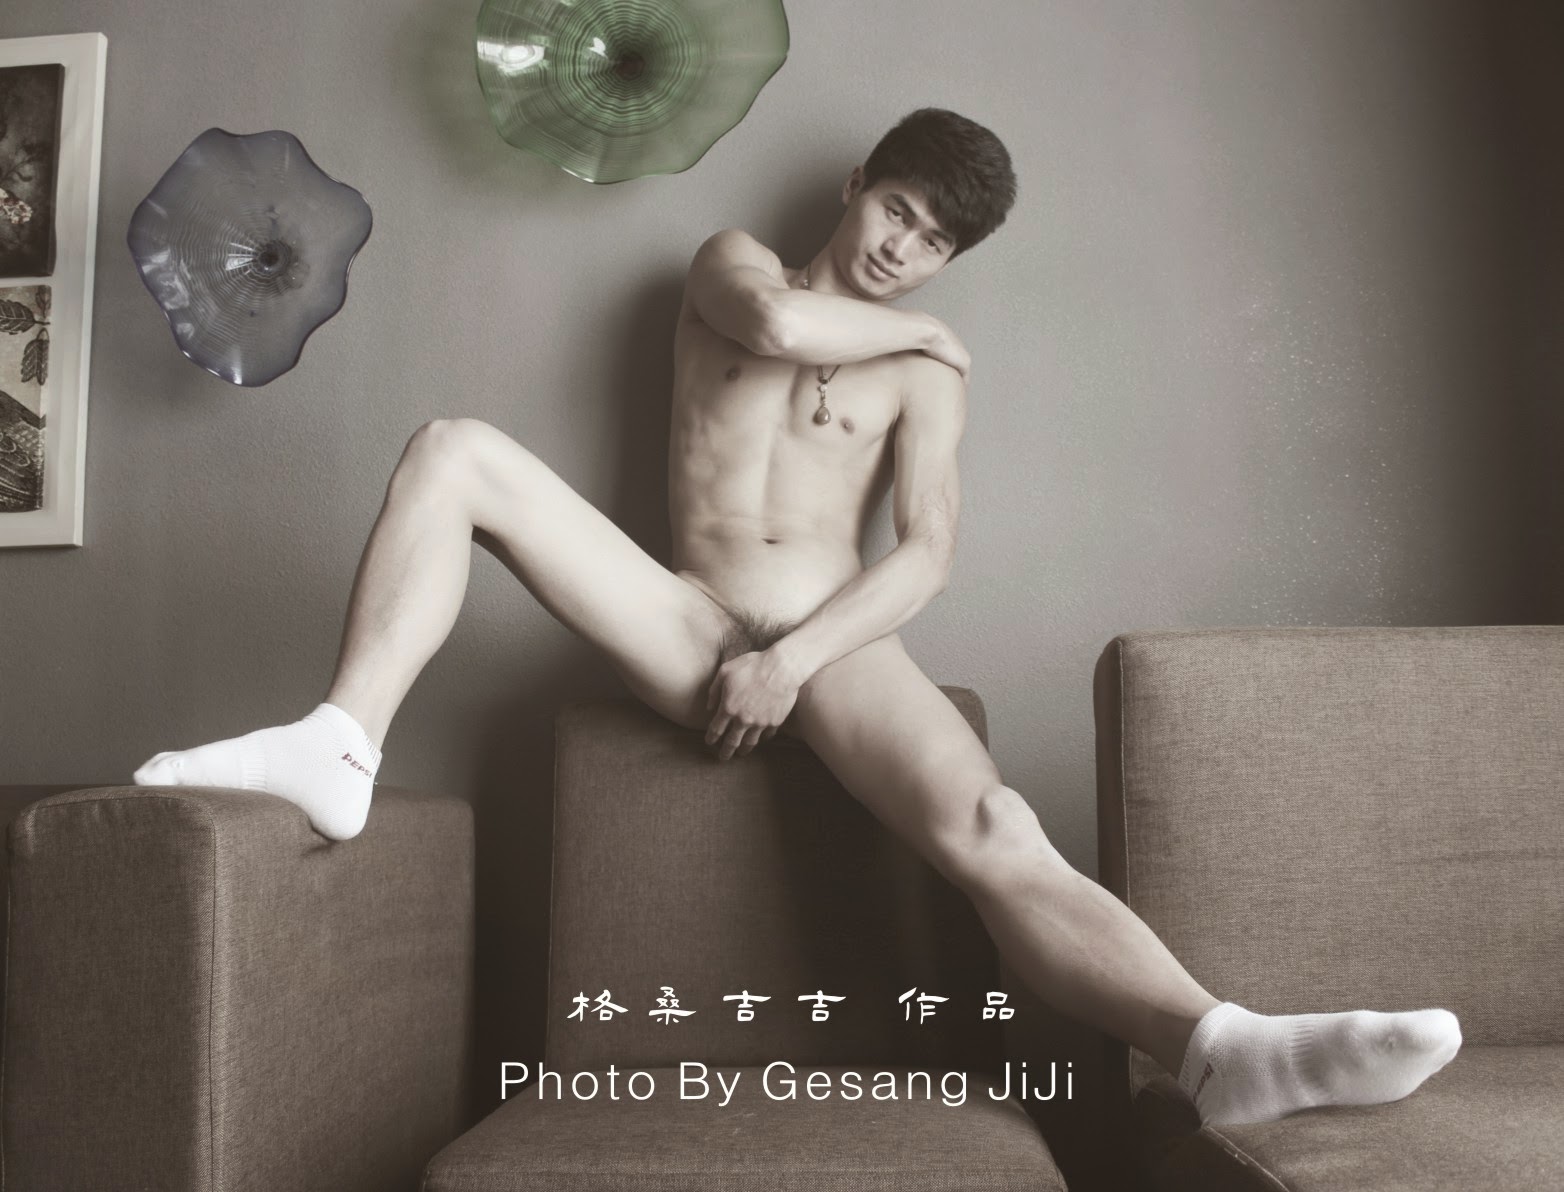 http://gayasiancollection.com/only-asian-boys-photos-from-jiji/